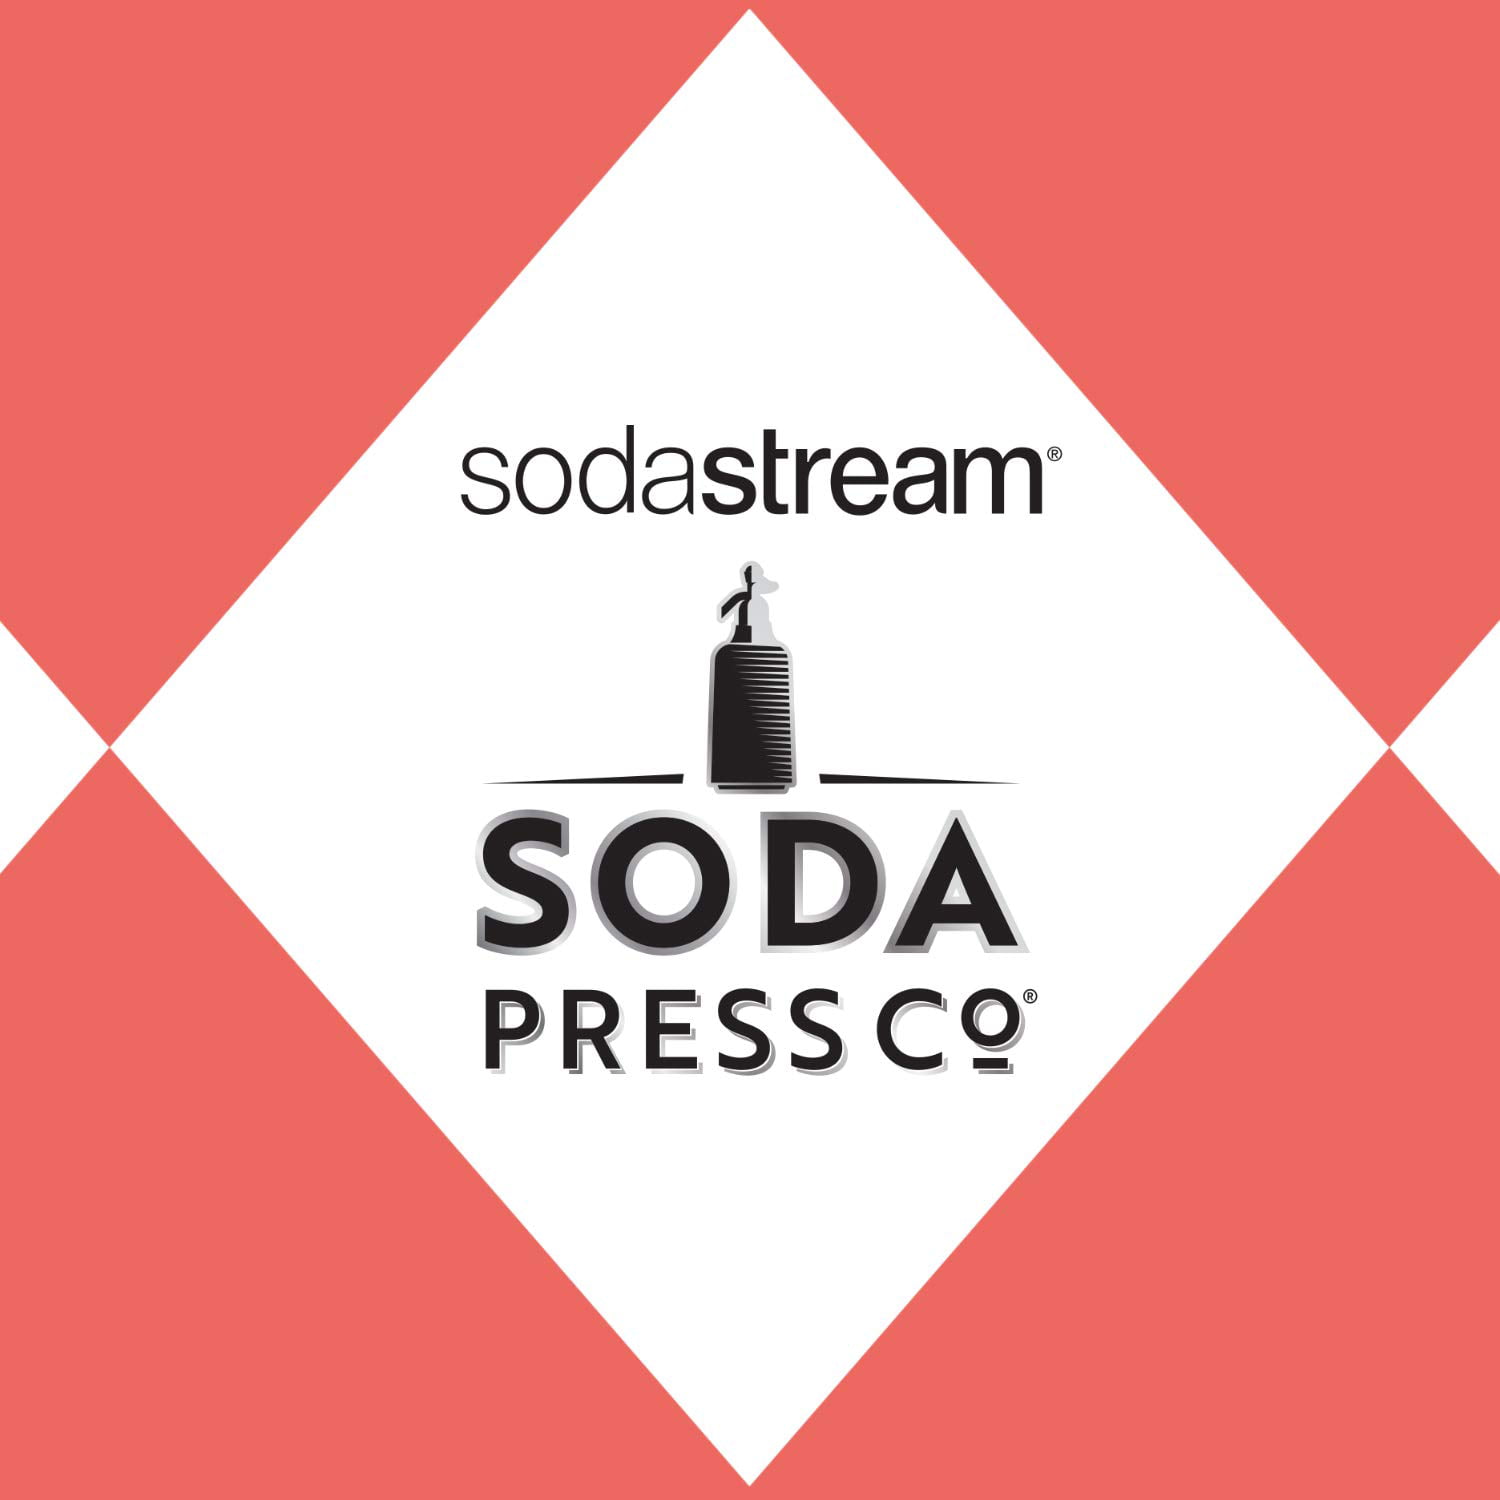 Sodastream sirop biologique sodastream soda press (bleuets et citron vert)  - soda press co blueberry & lime soda syrup (500 ml), Delivery Near You